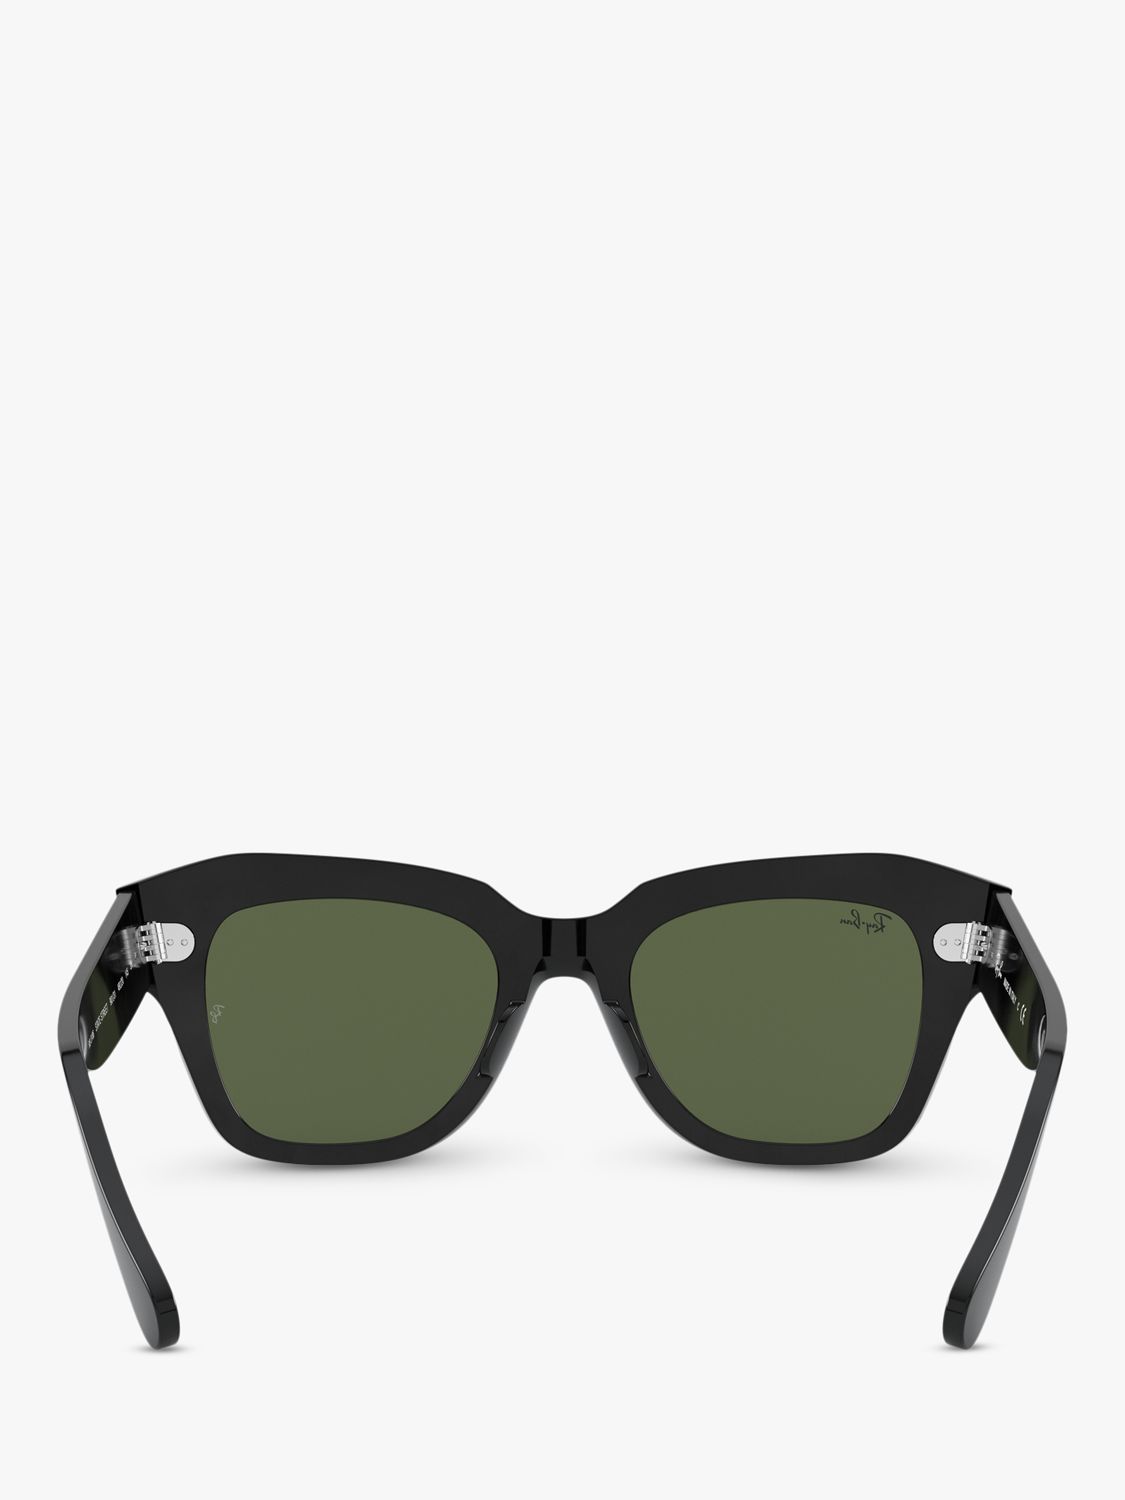 Ray-Ban RB2186 Unisex Square Sunglasses, Black